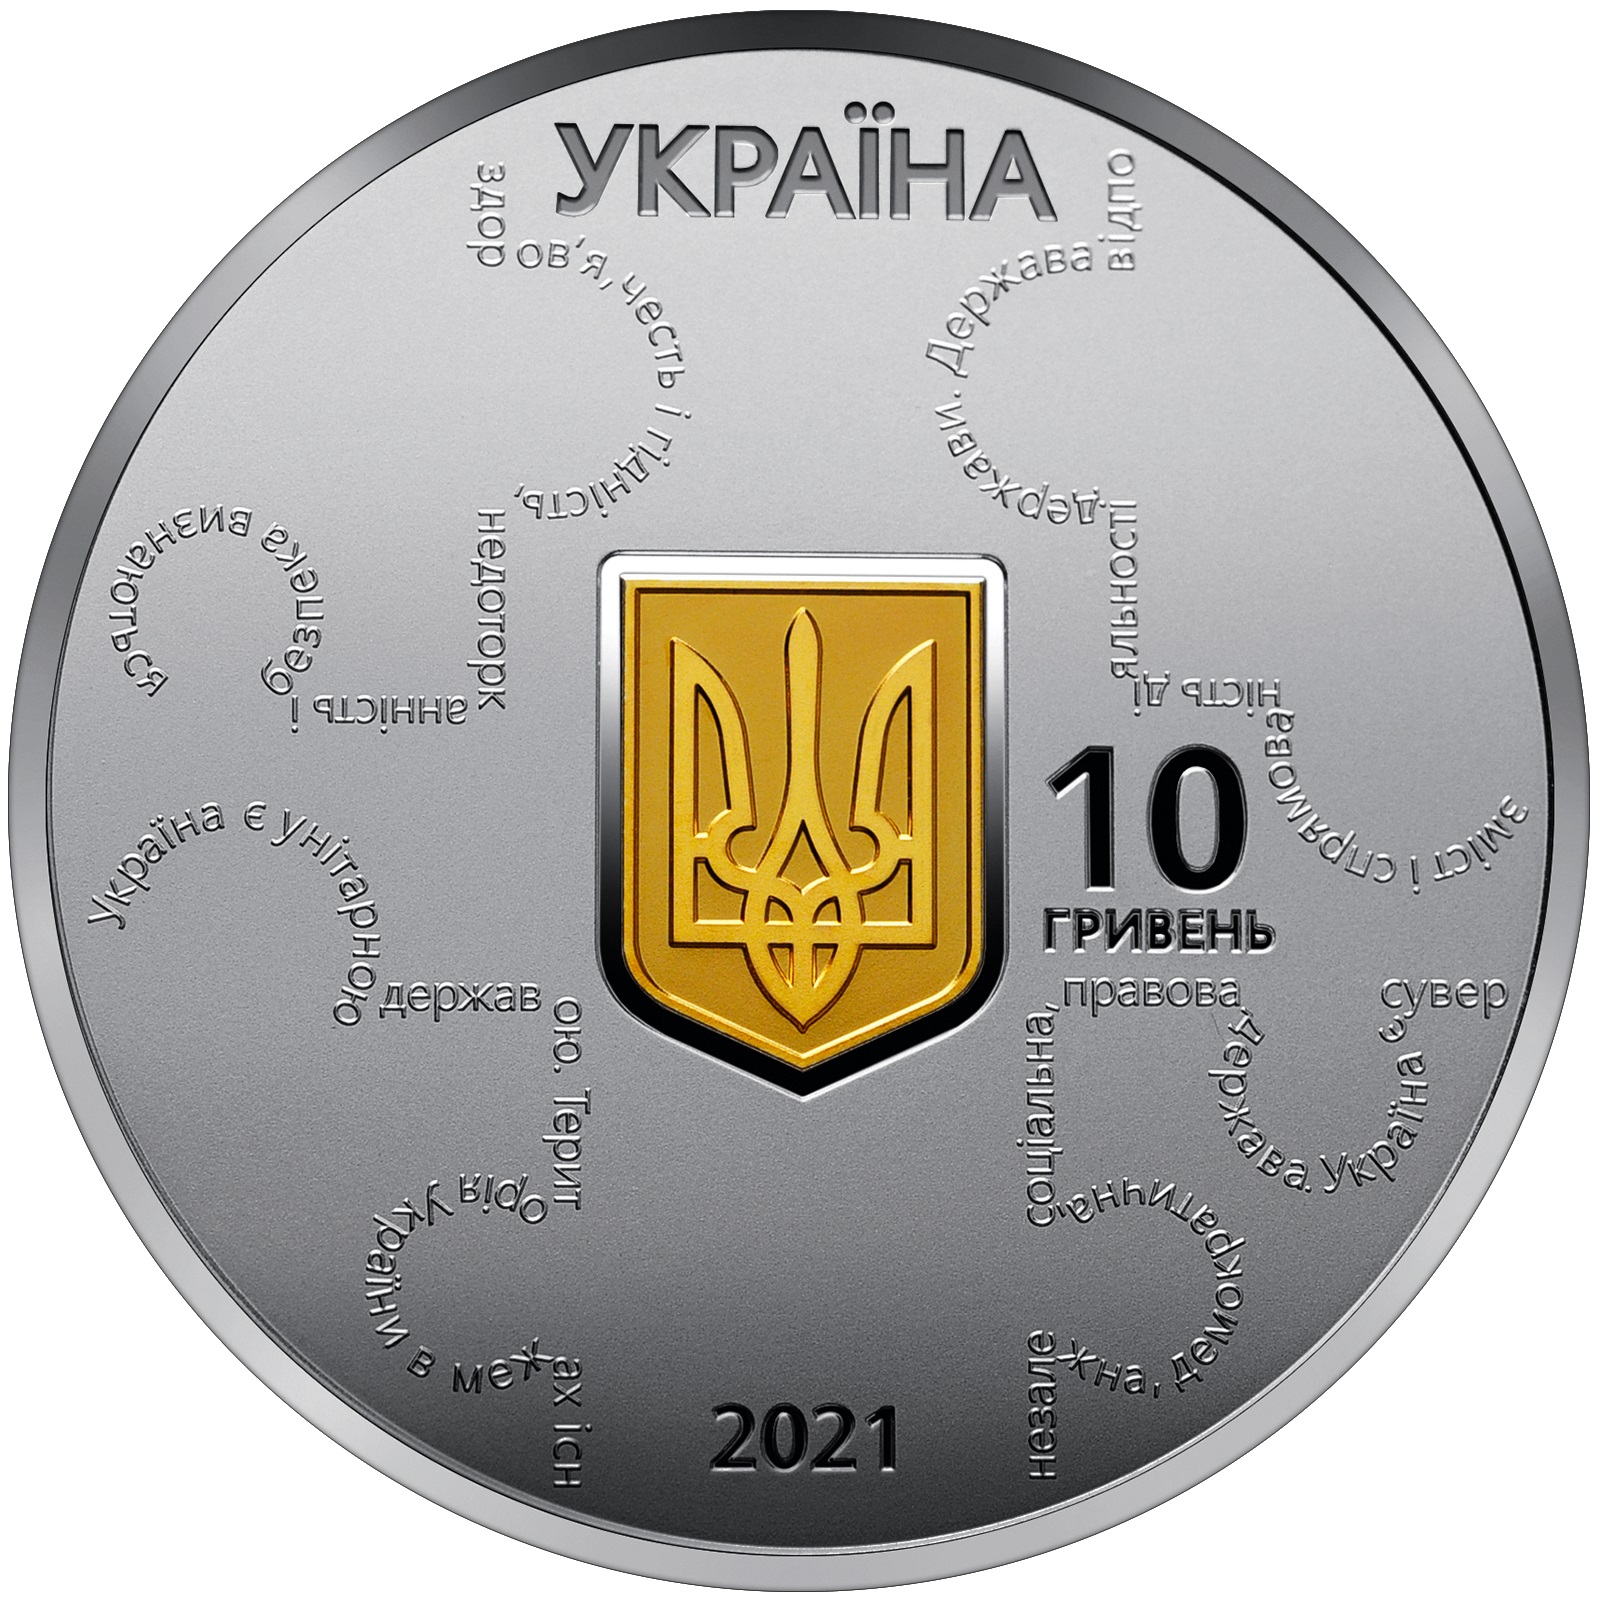 UA 10 Hryvnias 2021 National Bank of Ukraine logo